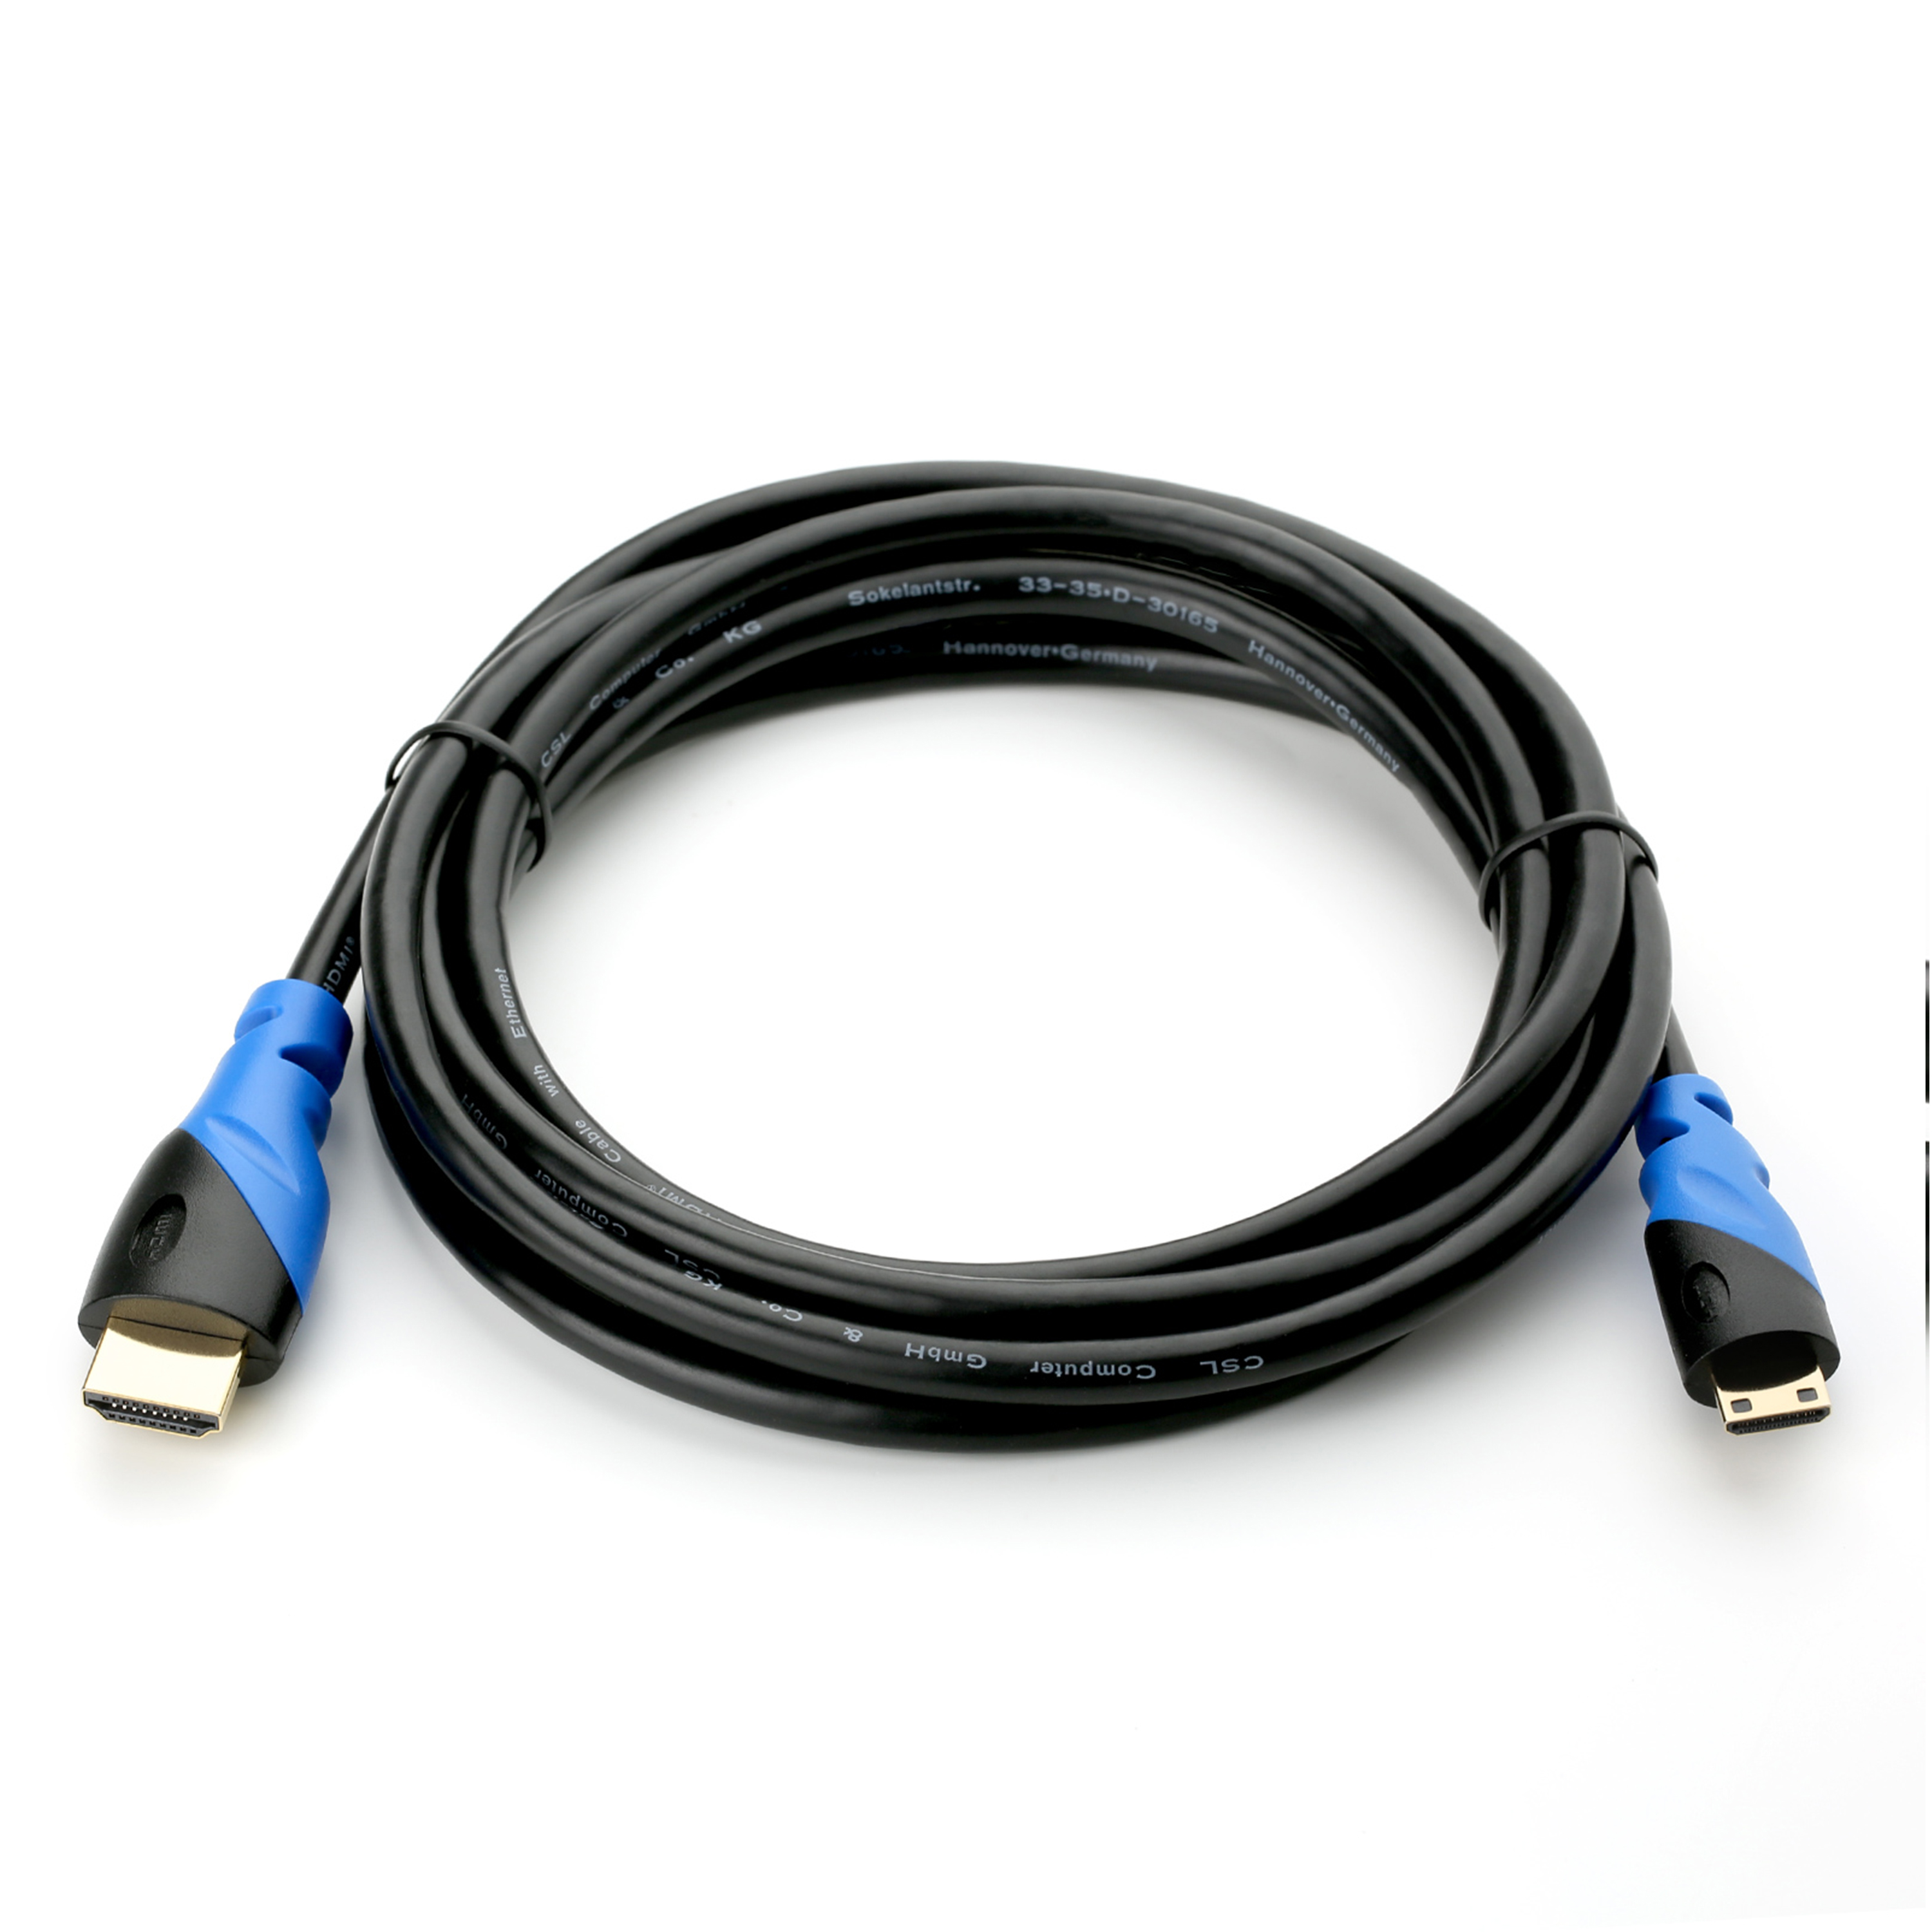 CSL MiniHDMI 2.0 Kabel, HDMI 2m schwarz/blau Kabel